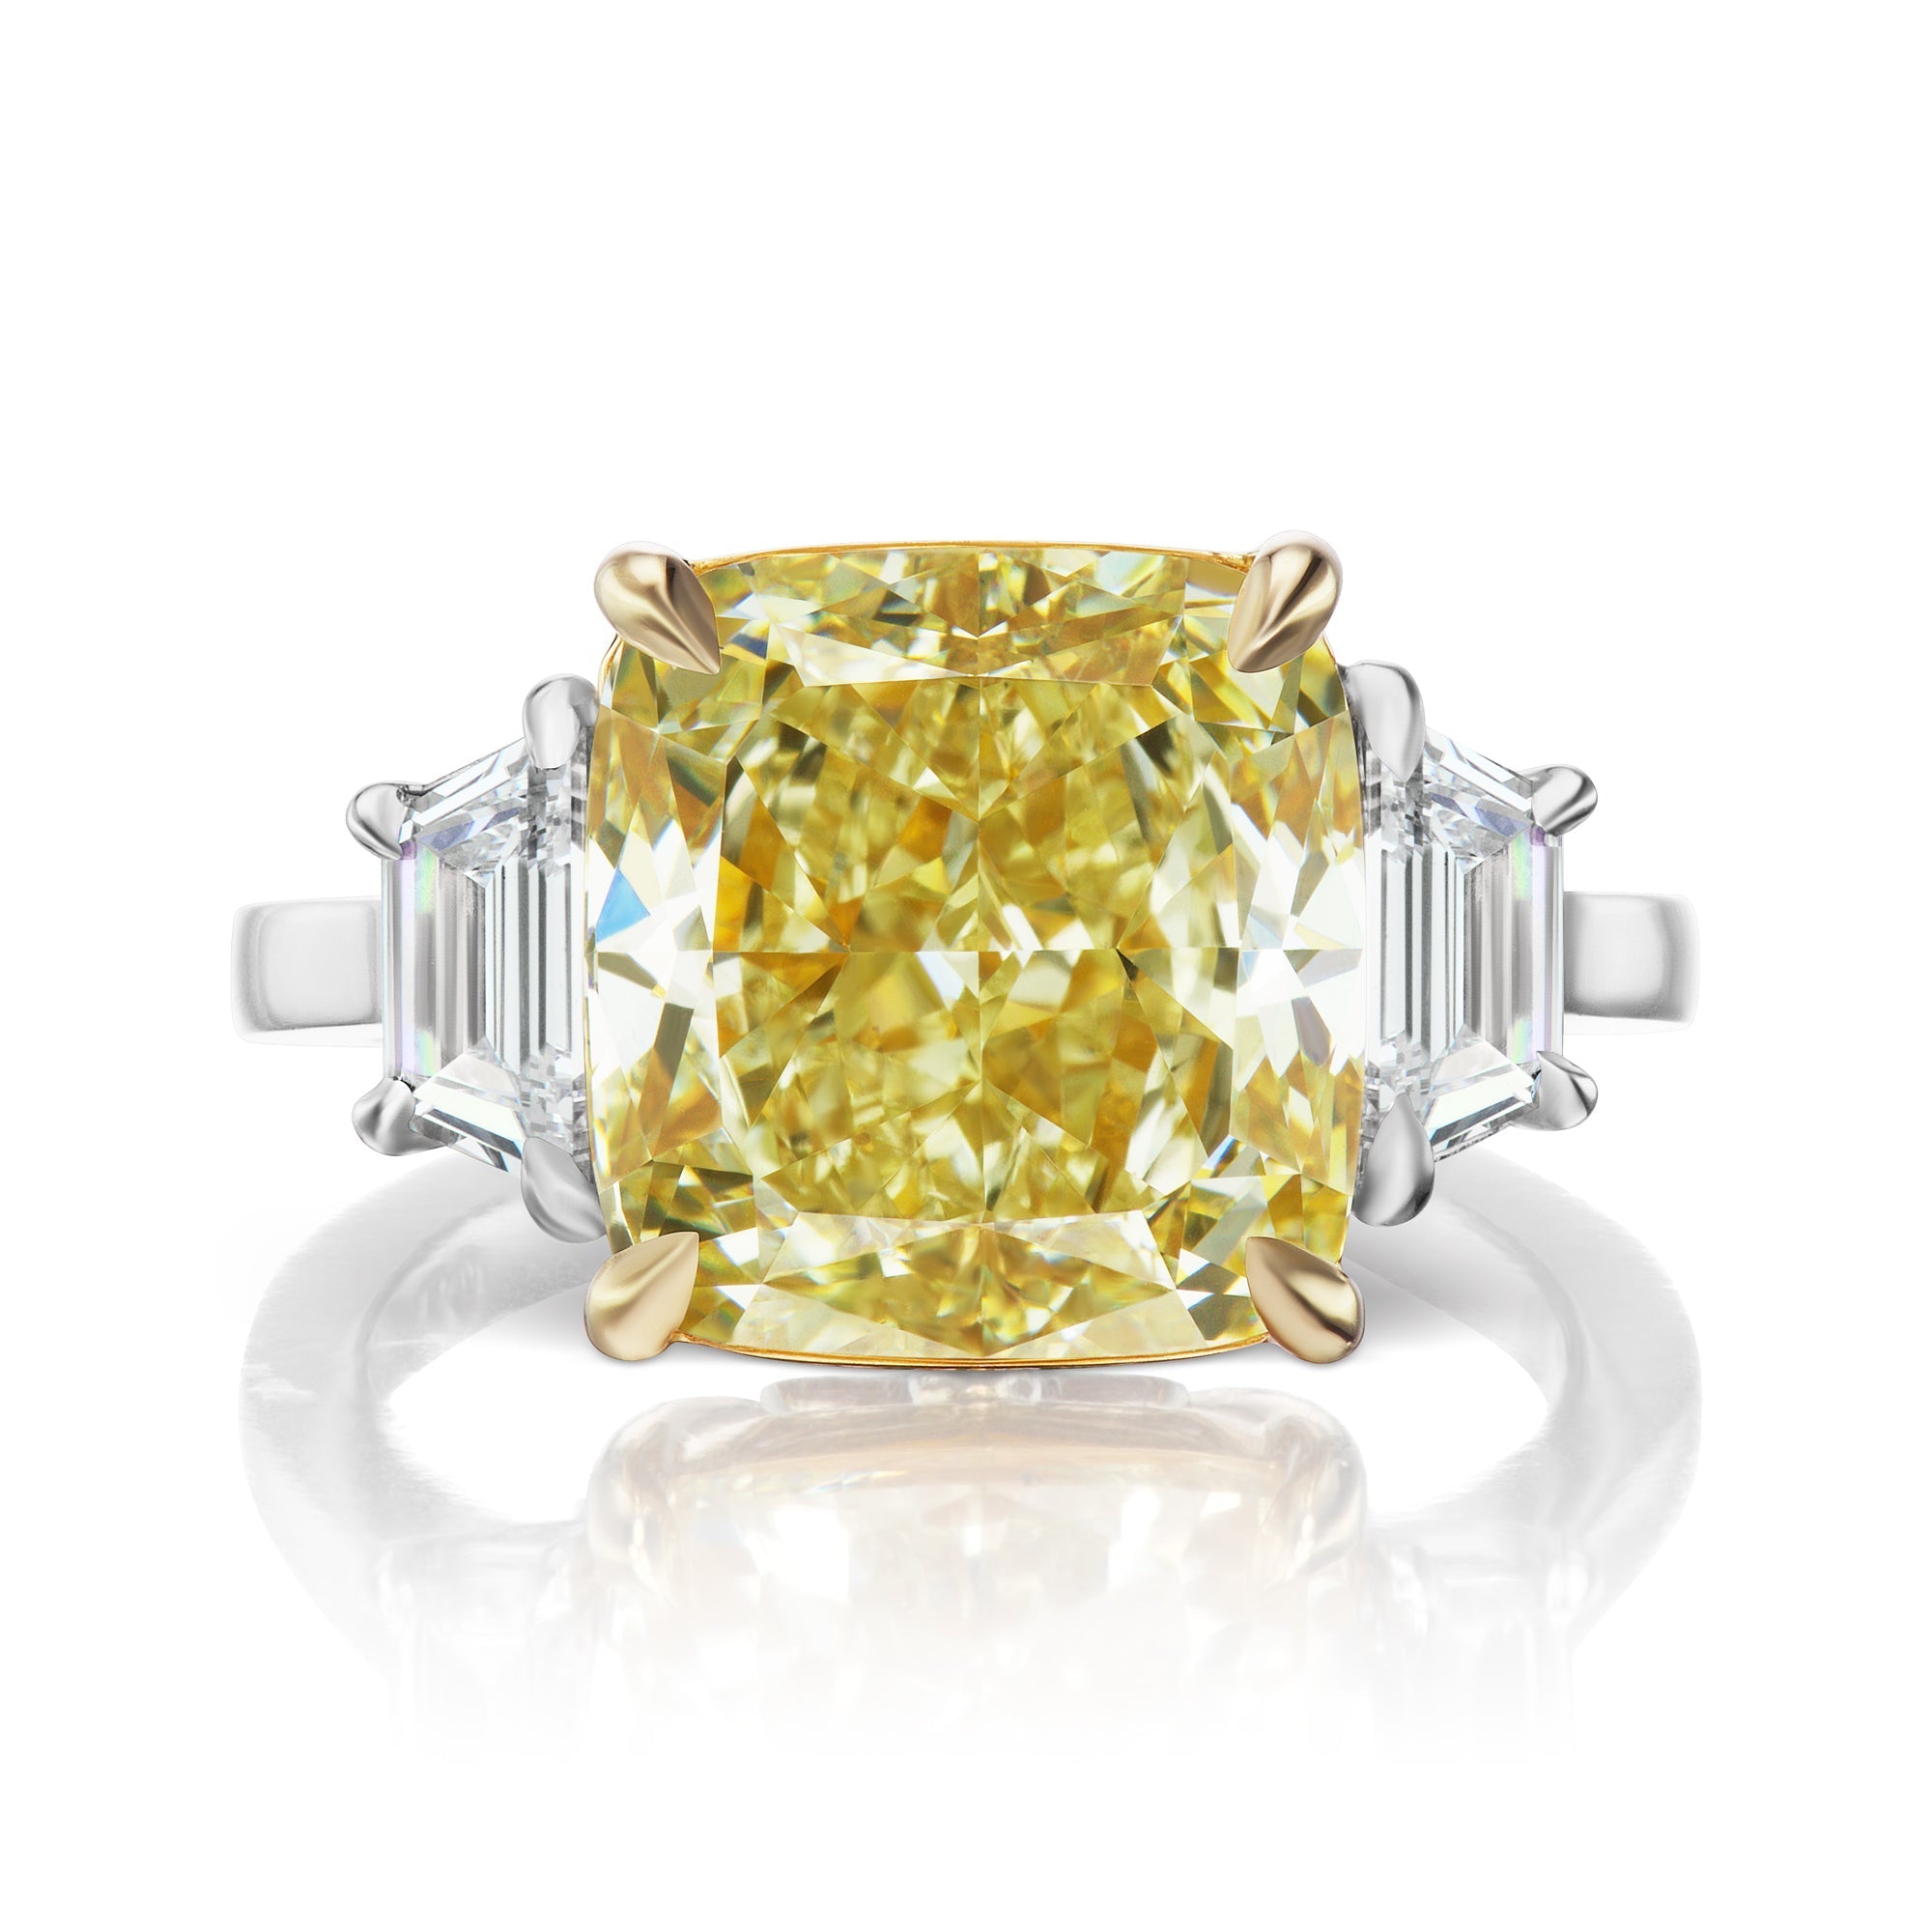 Yellow Diamond Ring Cushion Cut 9 Carat Three Stone Ring in Platinum Front View